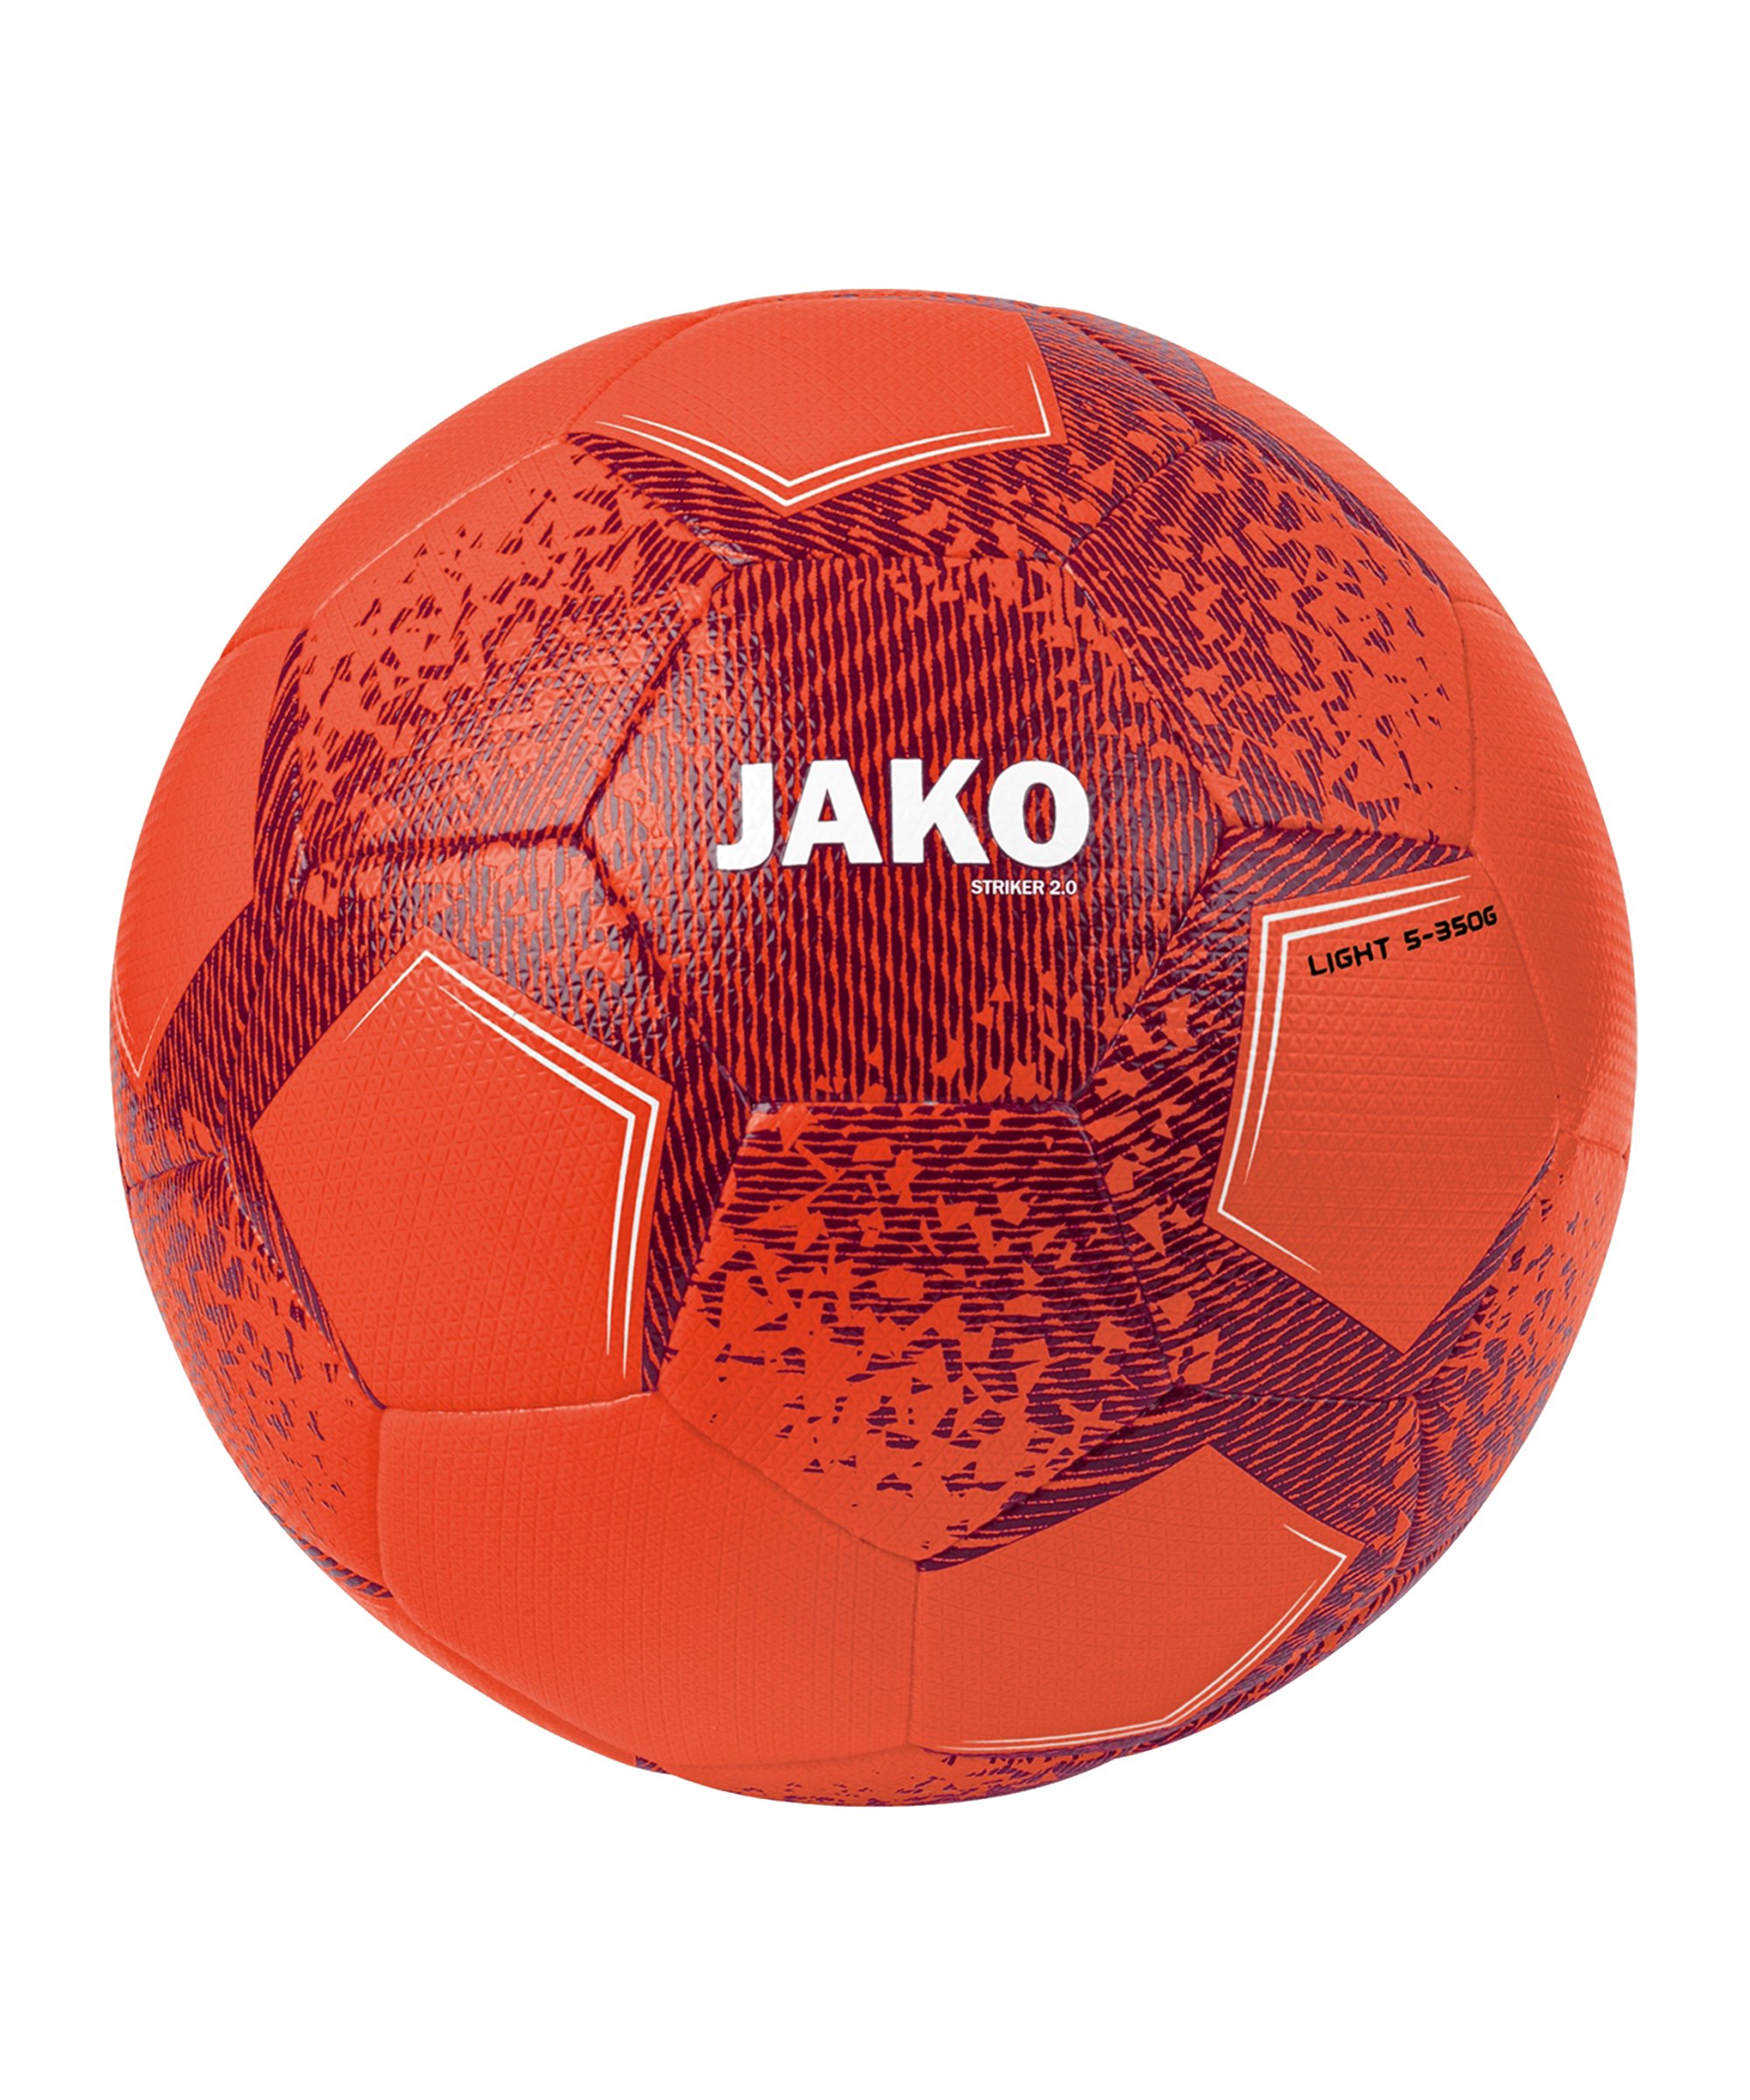 JAKO Striker 2.0 Lightball 350 Gramm Gr.5 F713 - orange